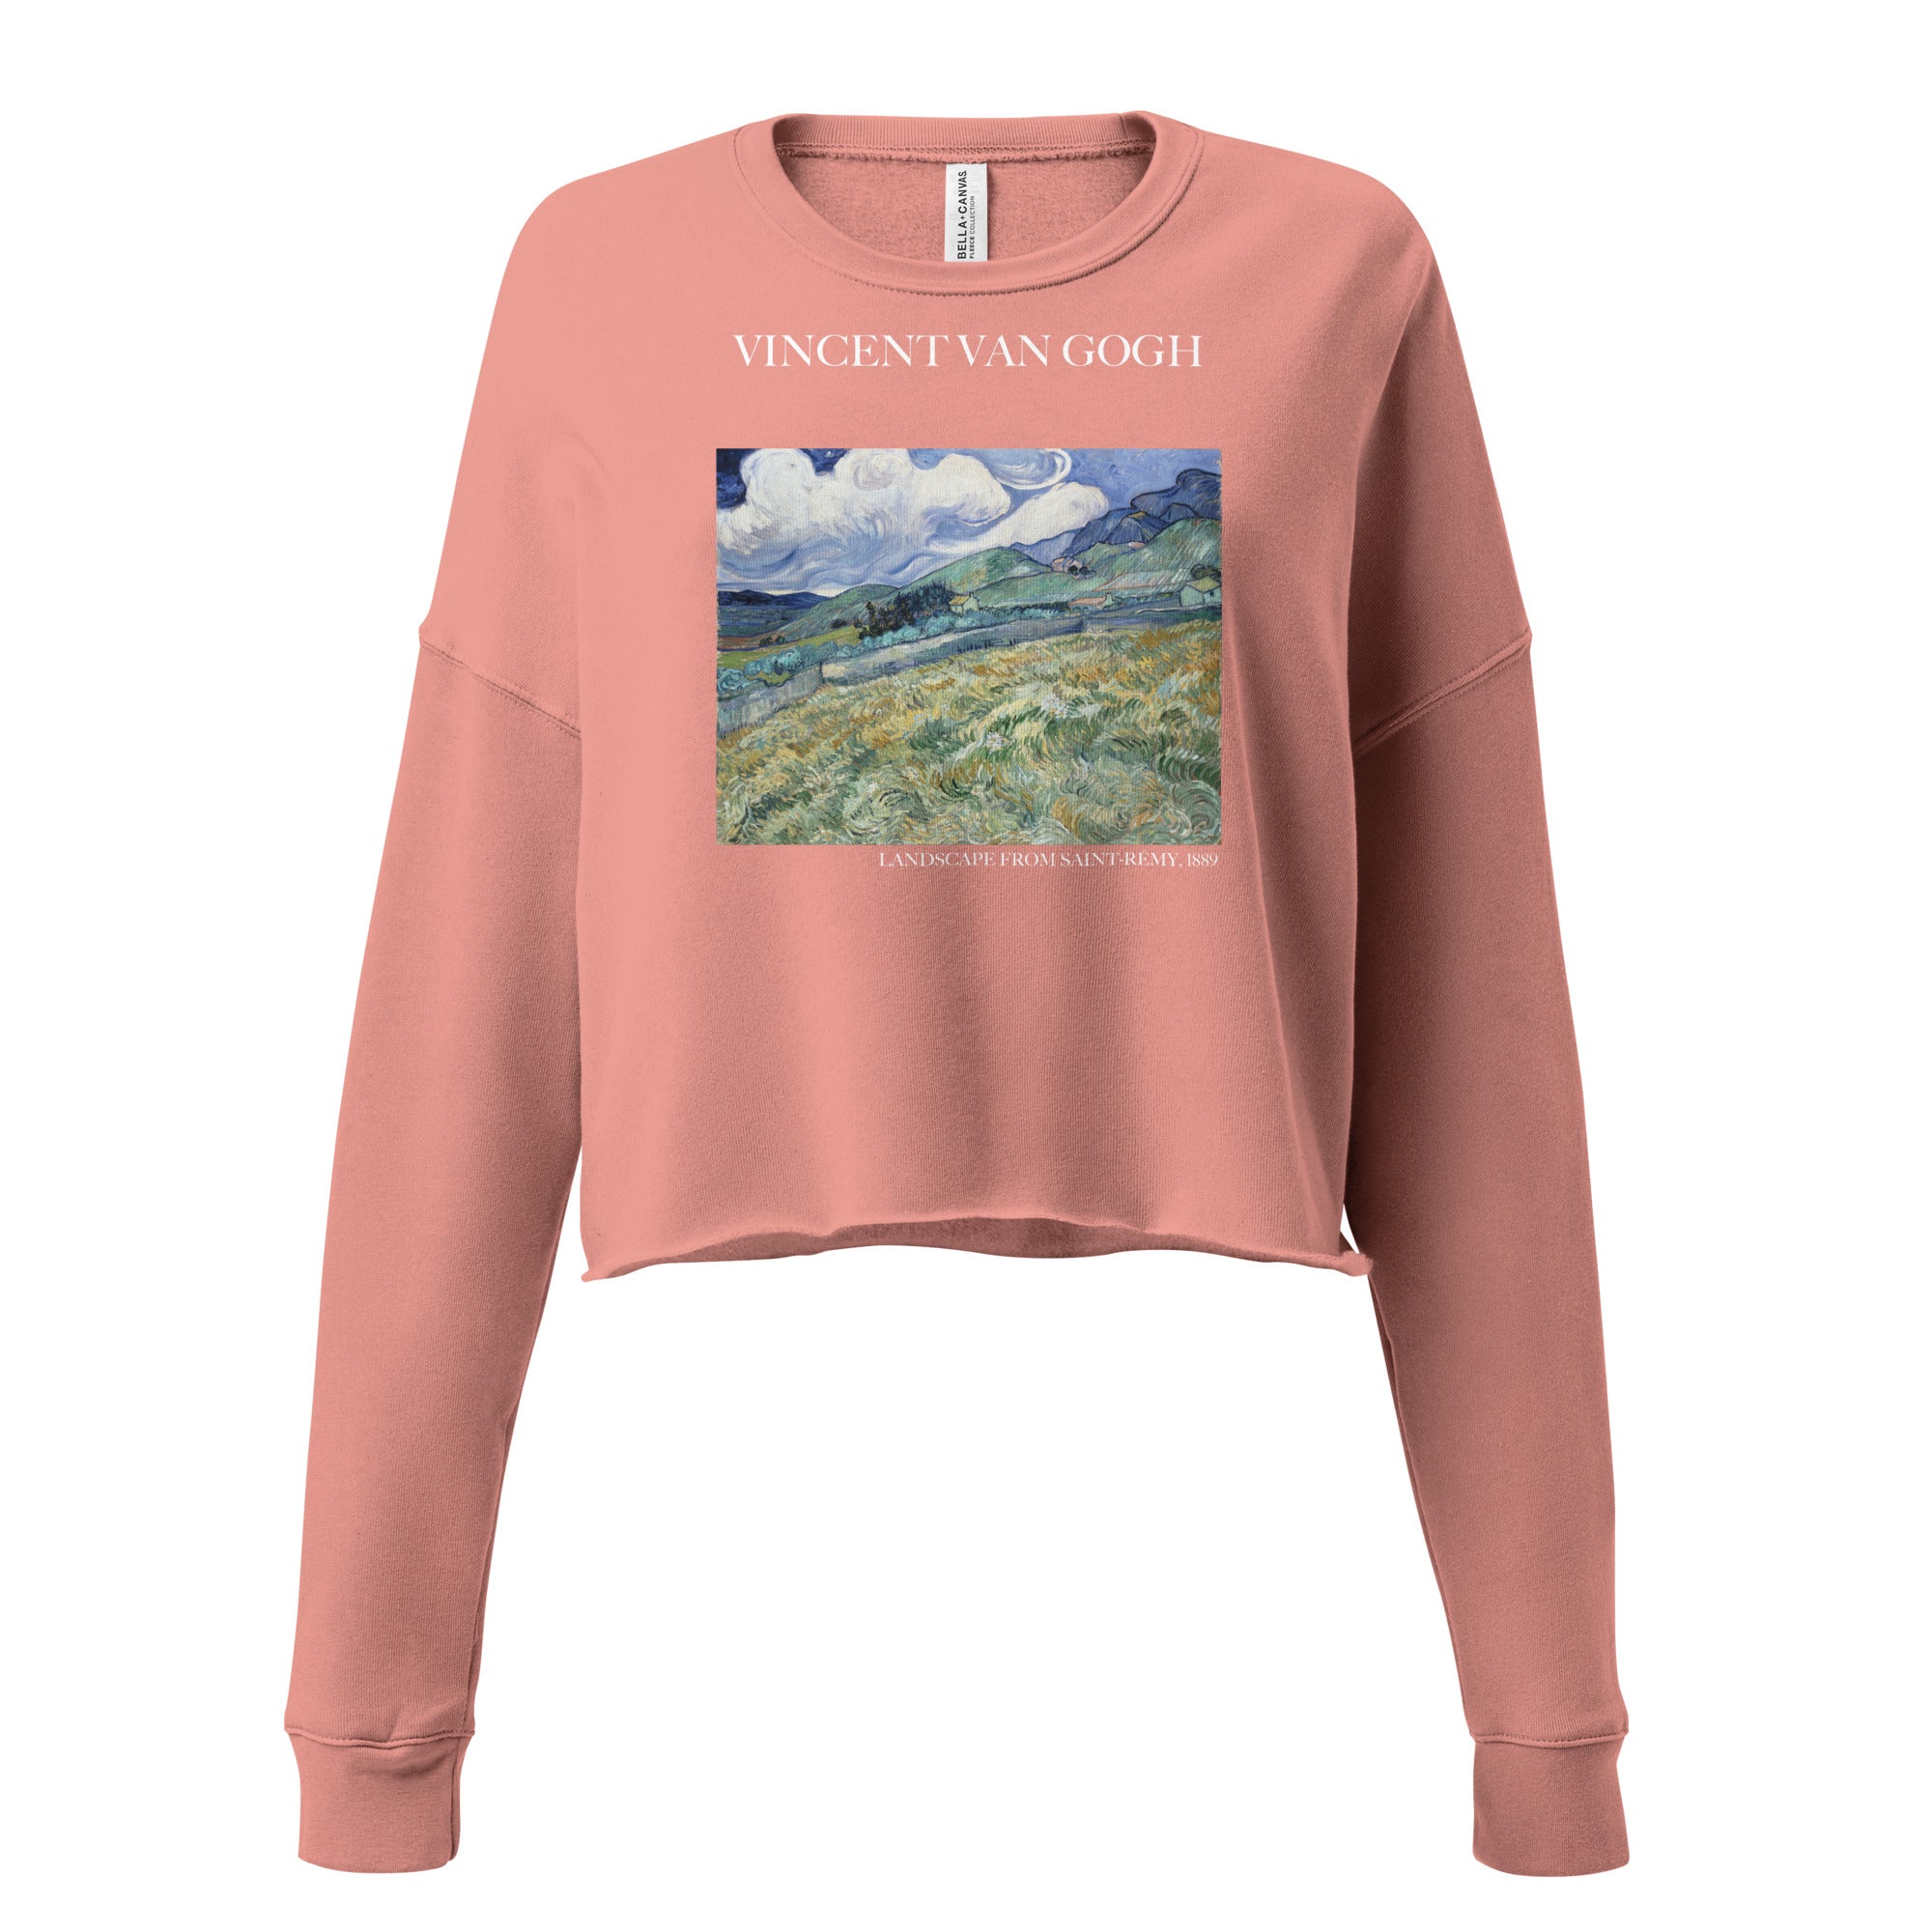 Vincent van Gogh „Landschaft von Saint-Rémy“, berühmtes Gemälde, kurzes Sweatshirt | Premium Art, kurzes Sweatshirt